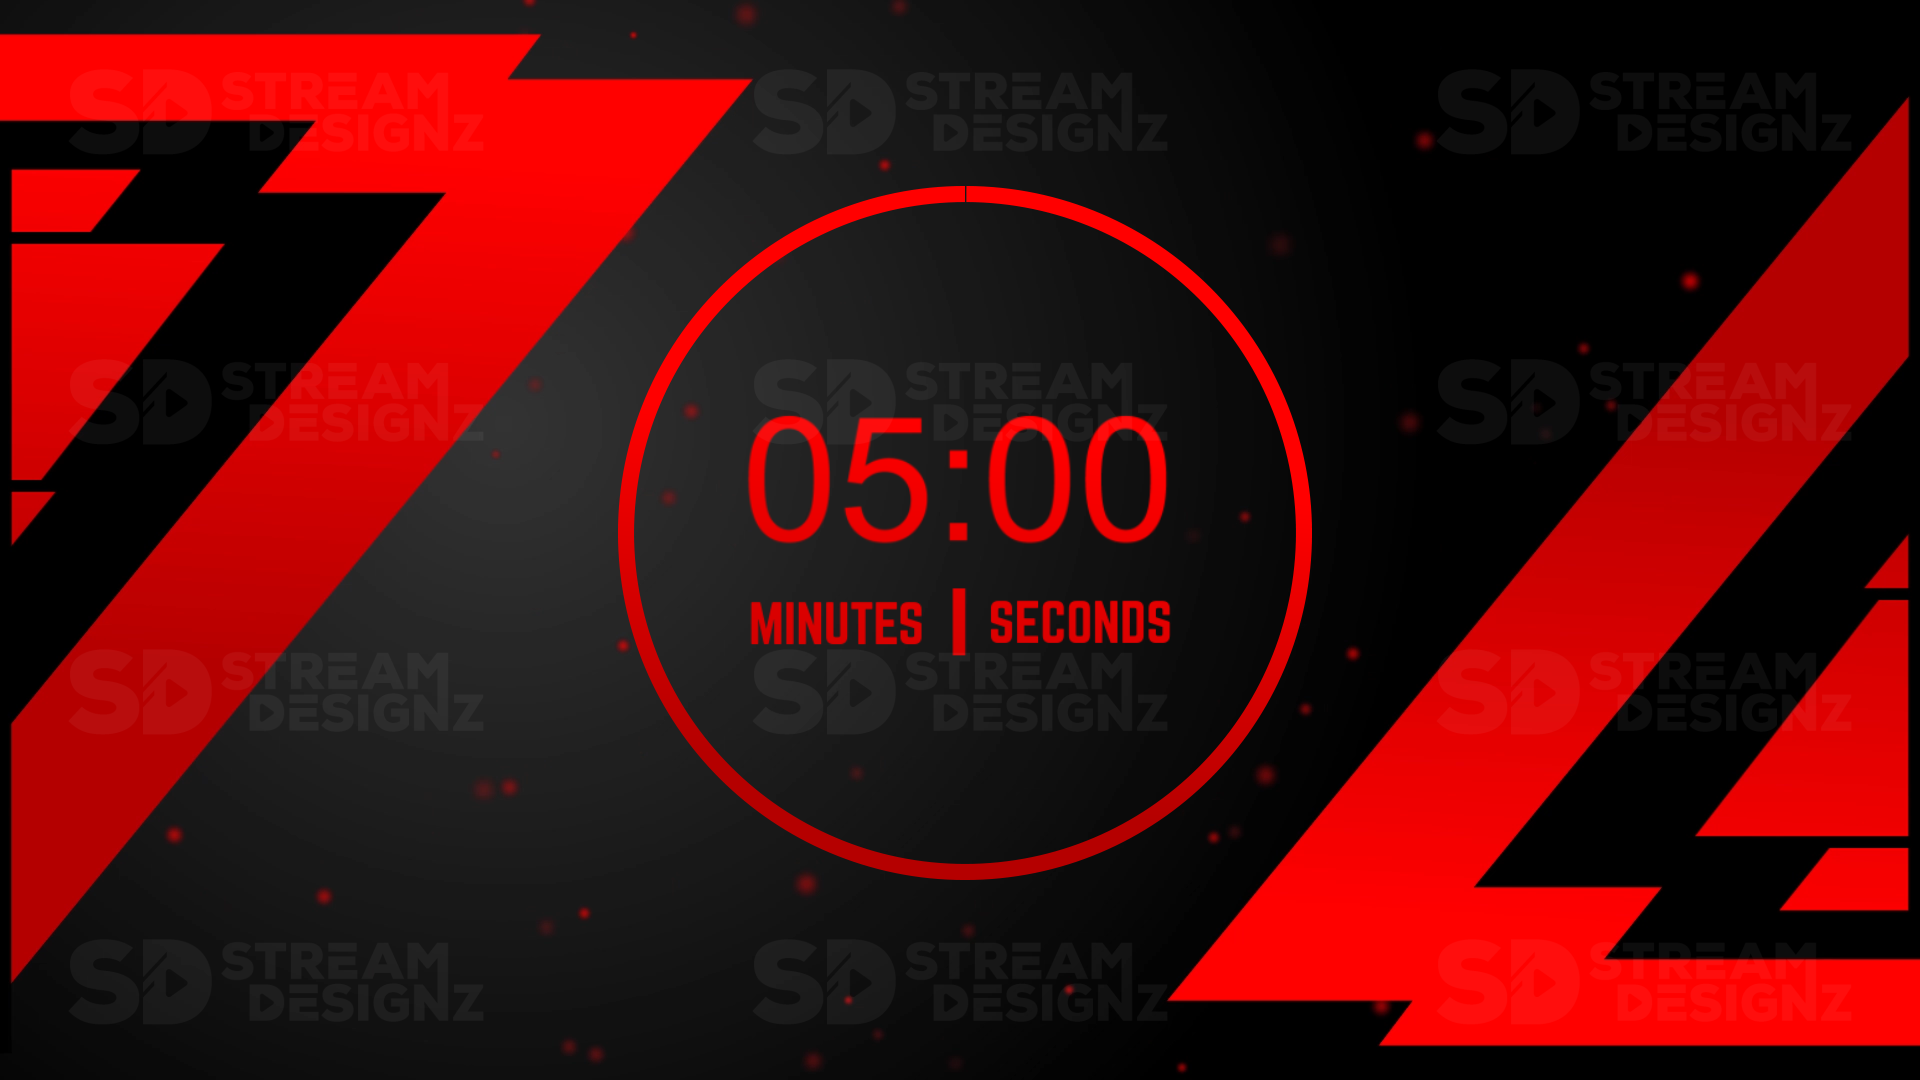 5 minute countdown timer rogue thumbnail stream designz